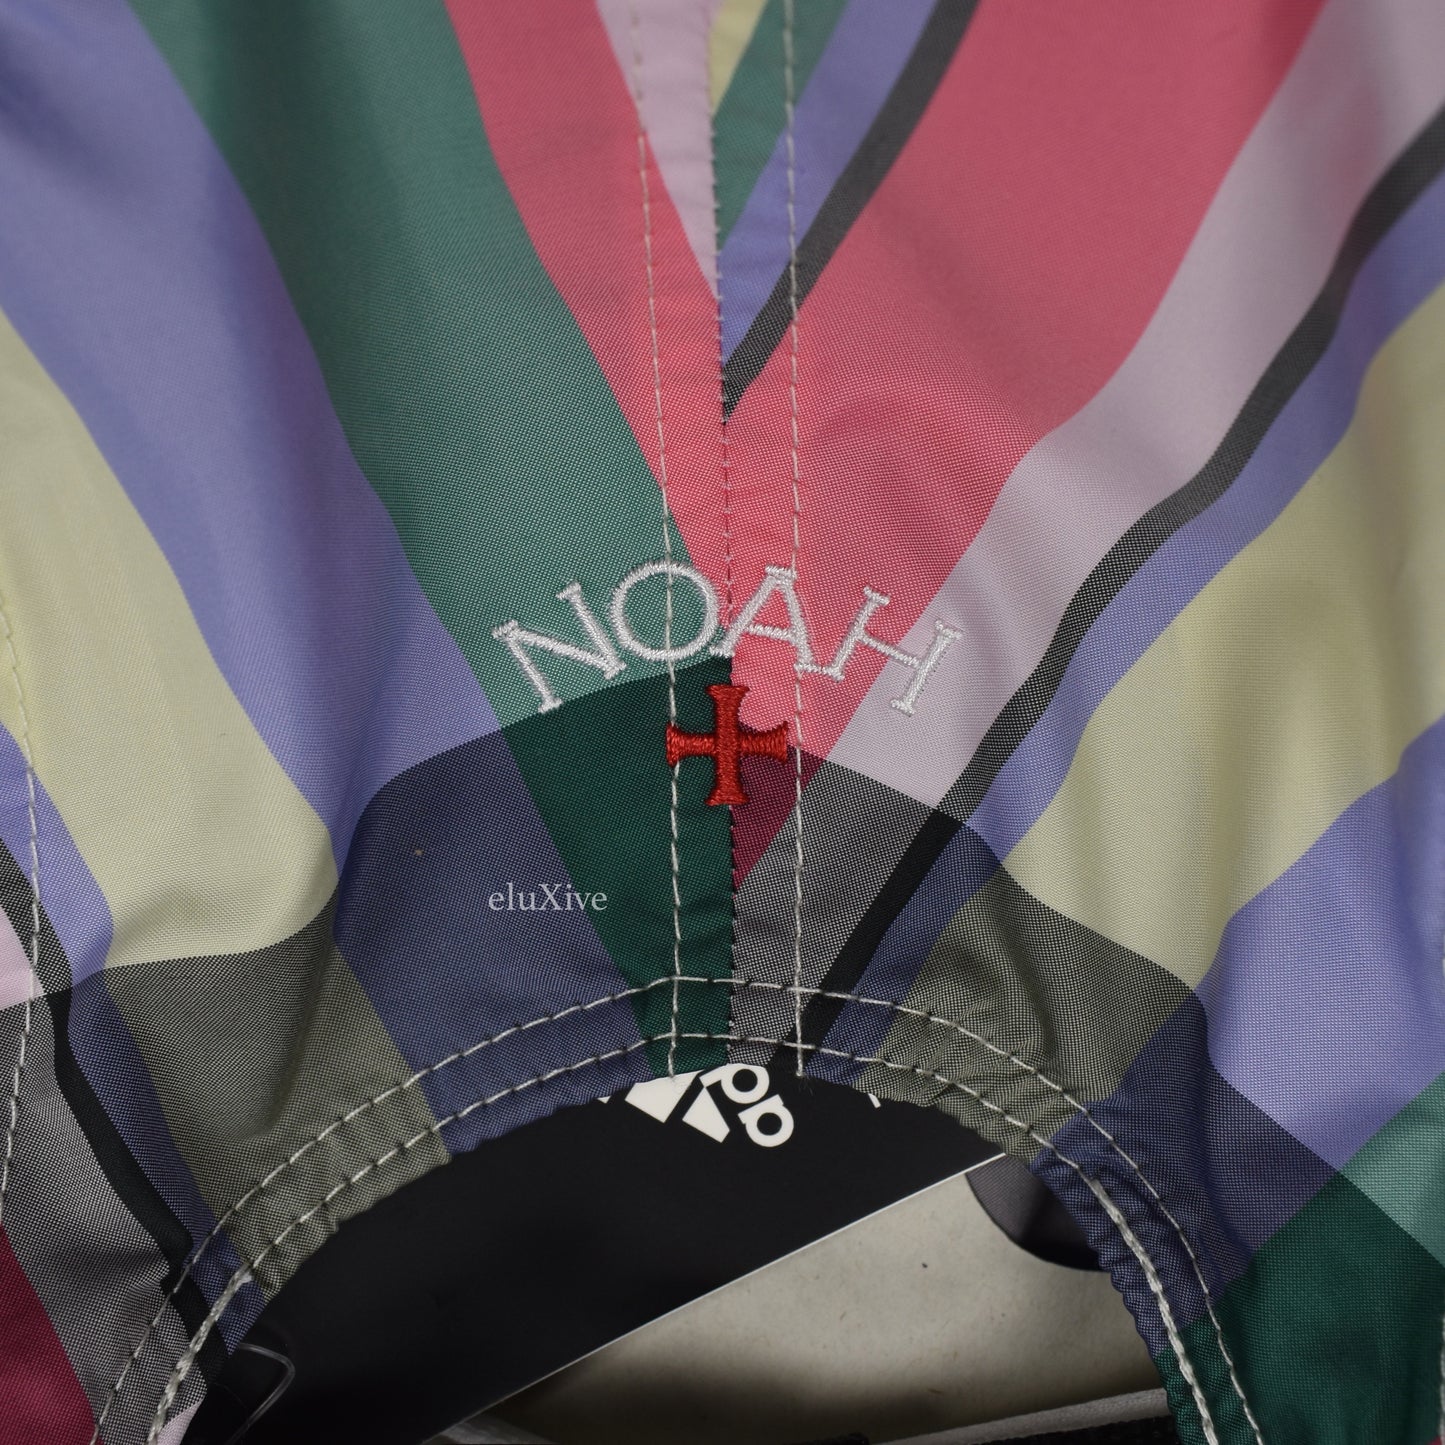 Noah x Adidas - Plaid Mesh Side Runner Hat